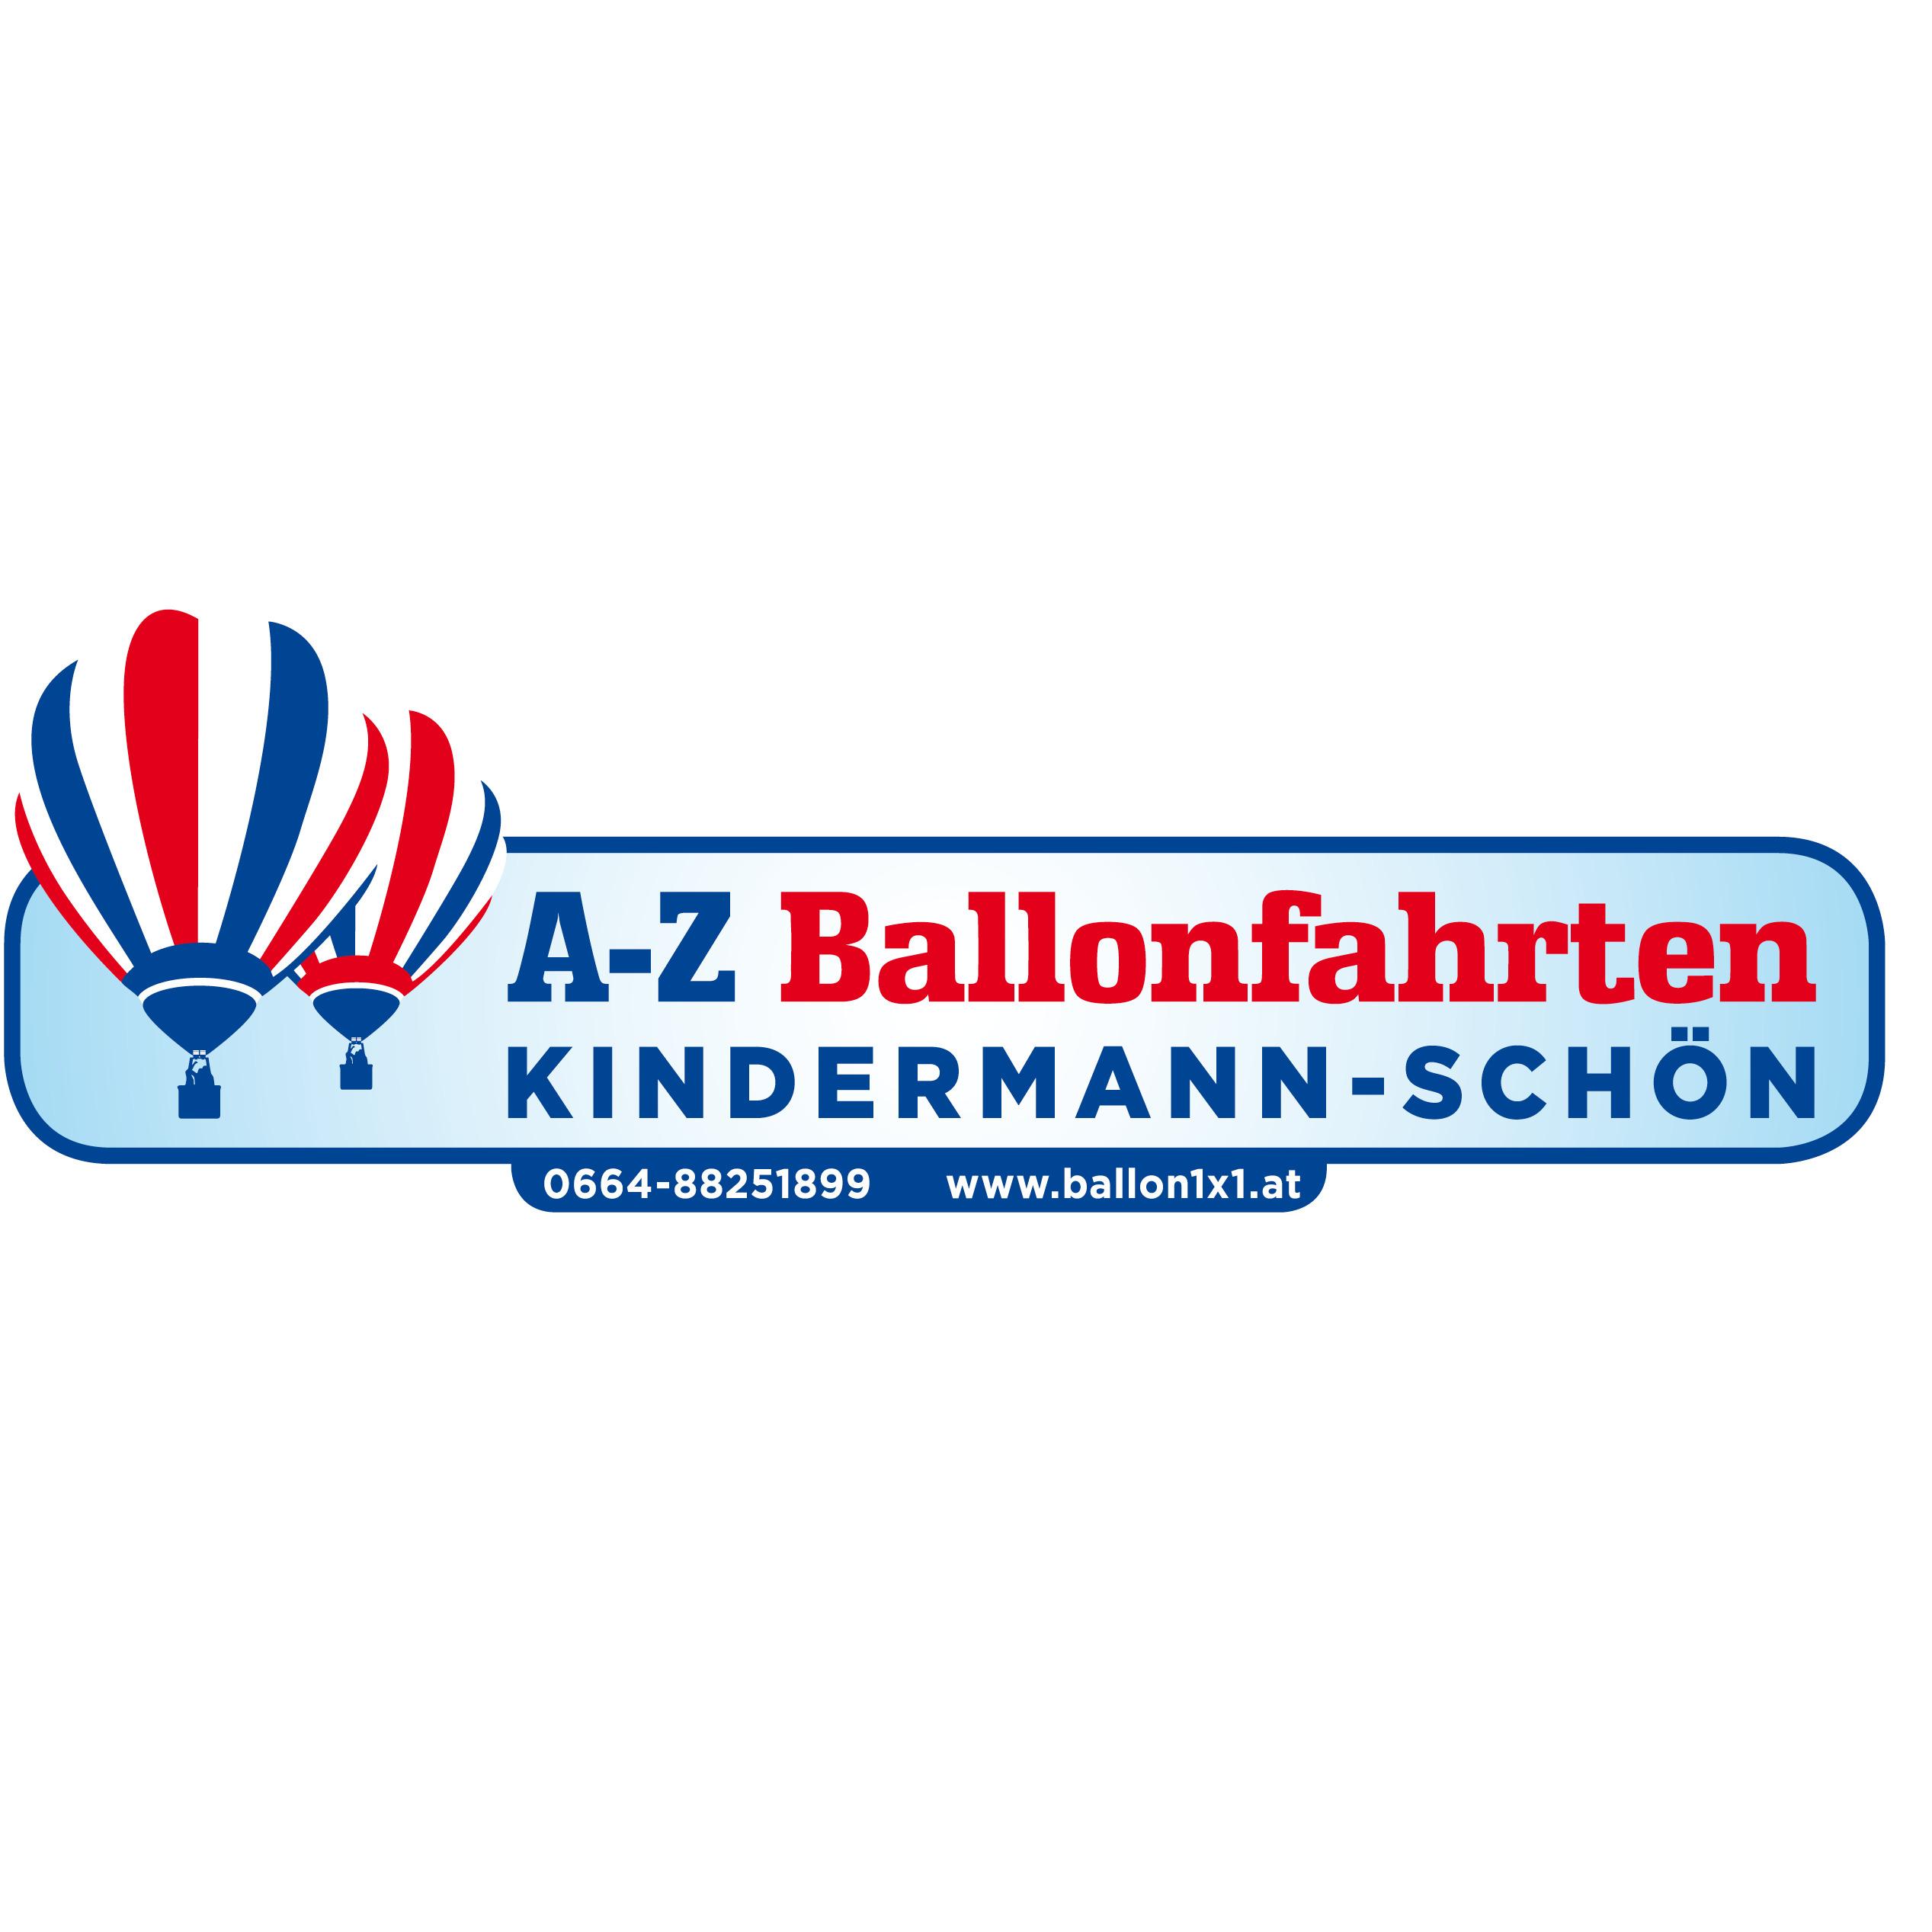 A-Z Ballonfahrten Kindermann-Schön KG Logo